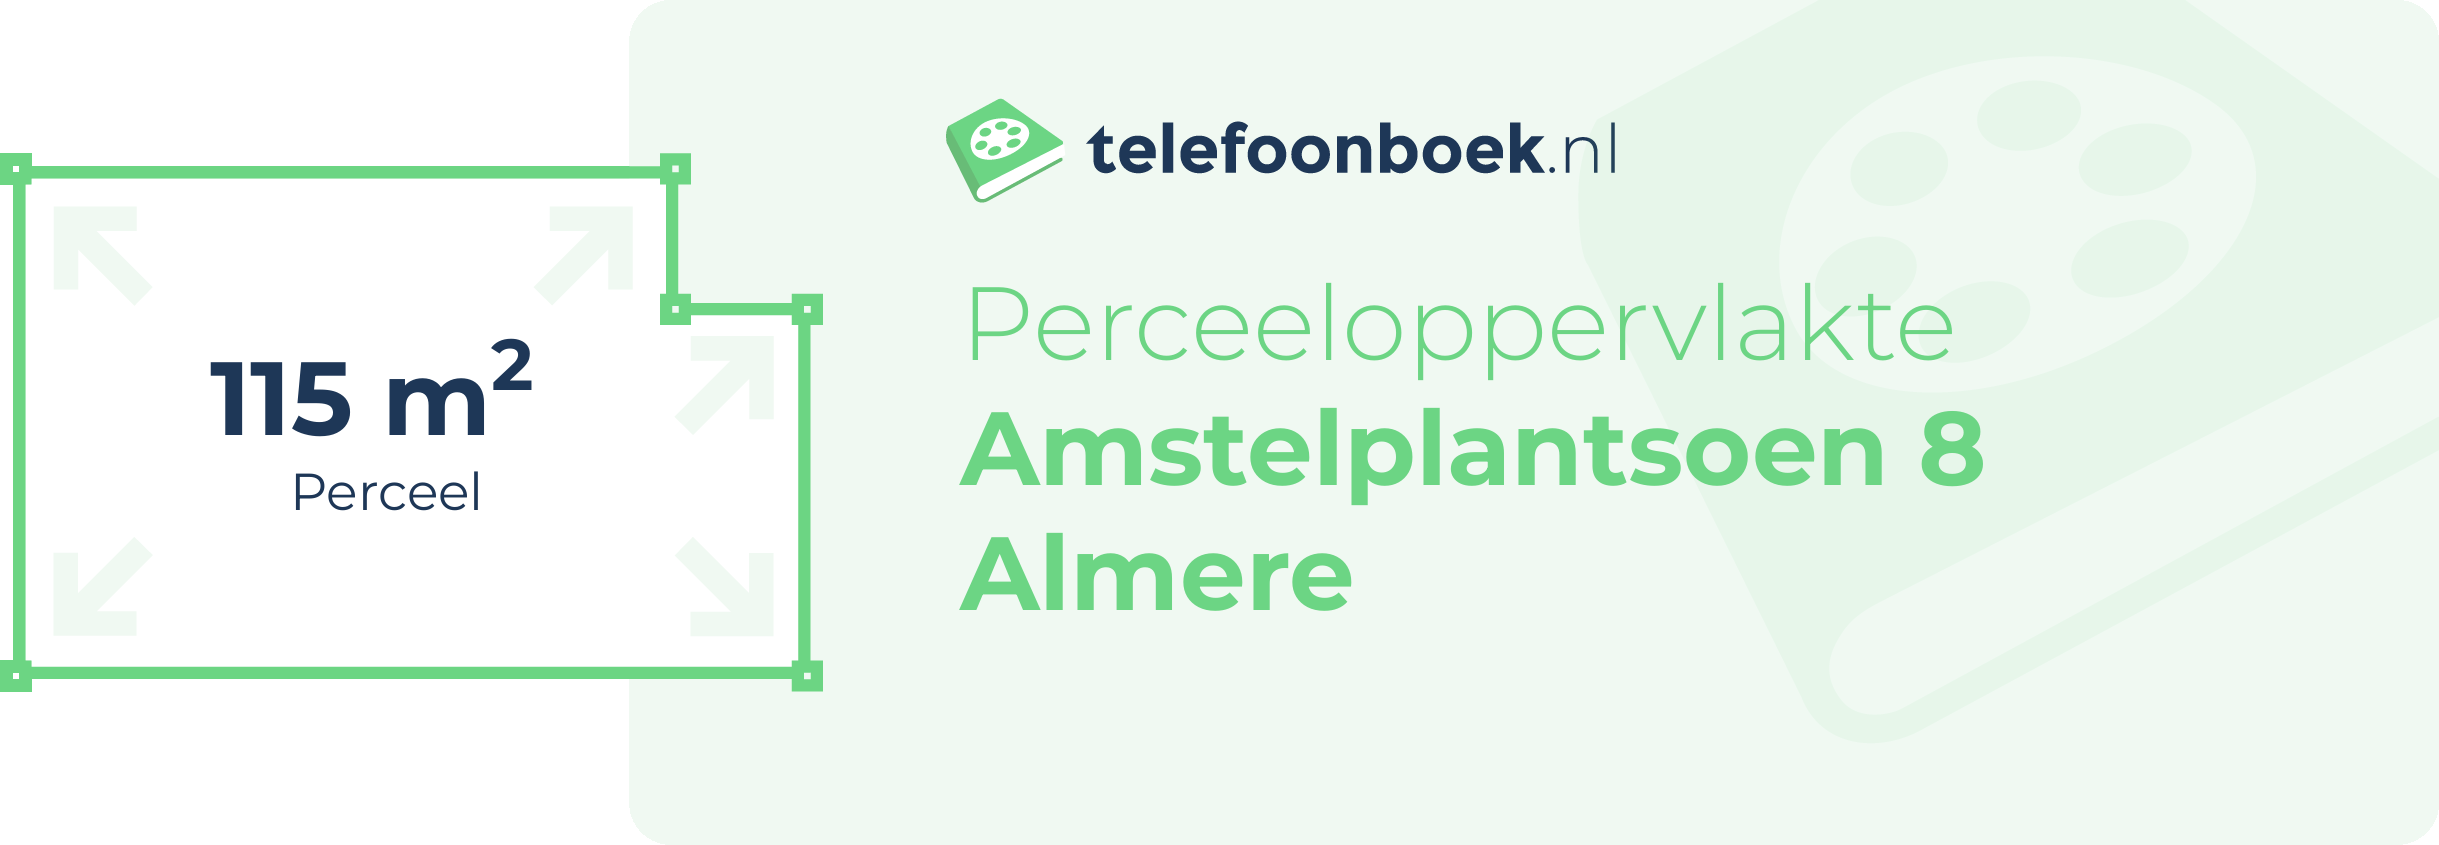 Perceeloppervlakte Amstelplantsoen 8 Almere